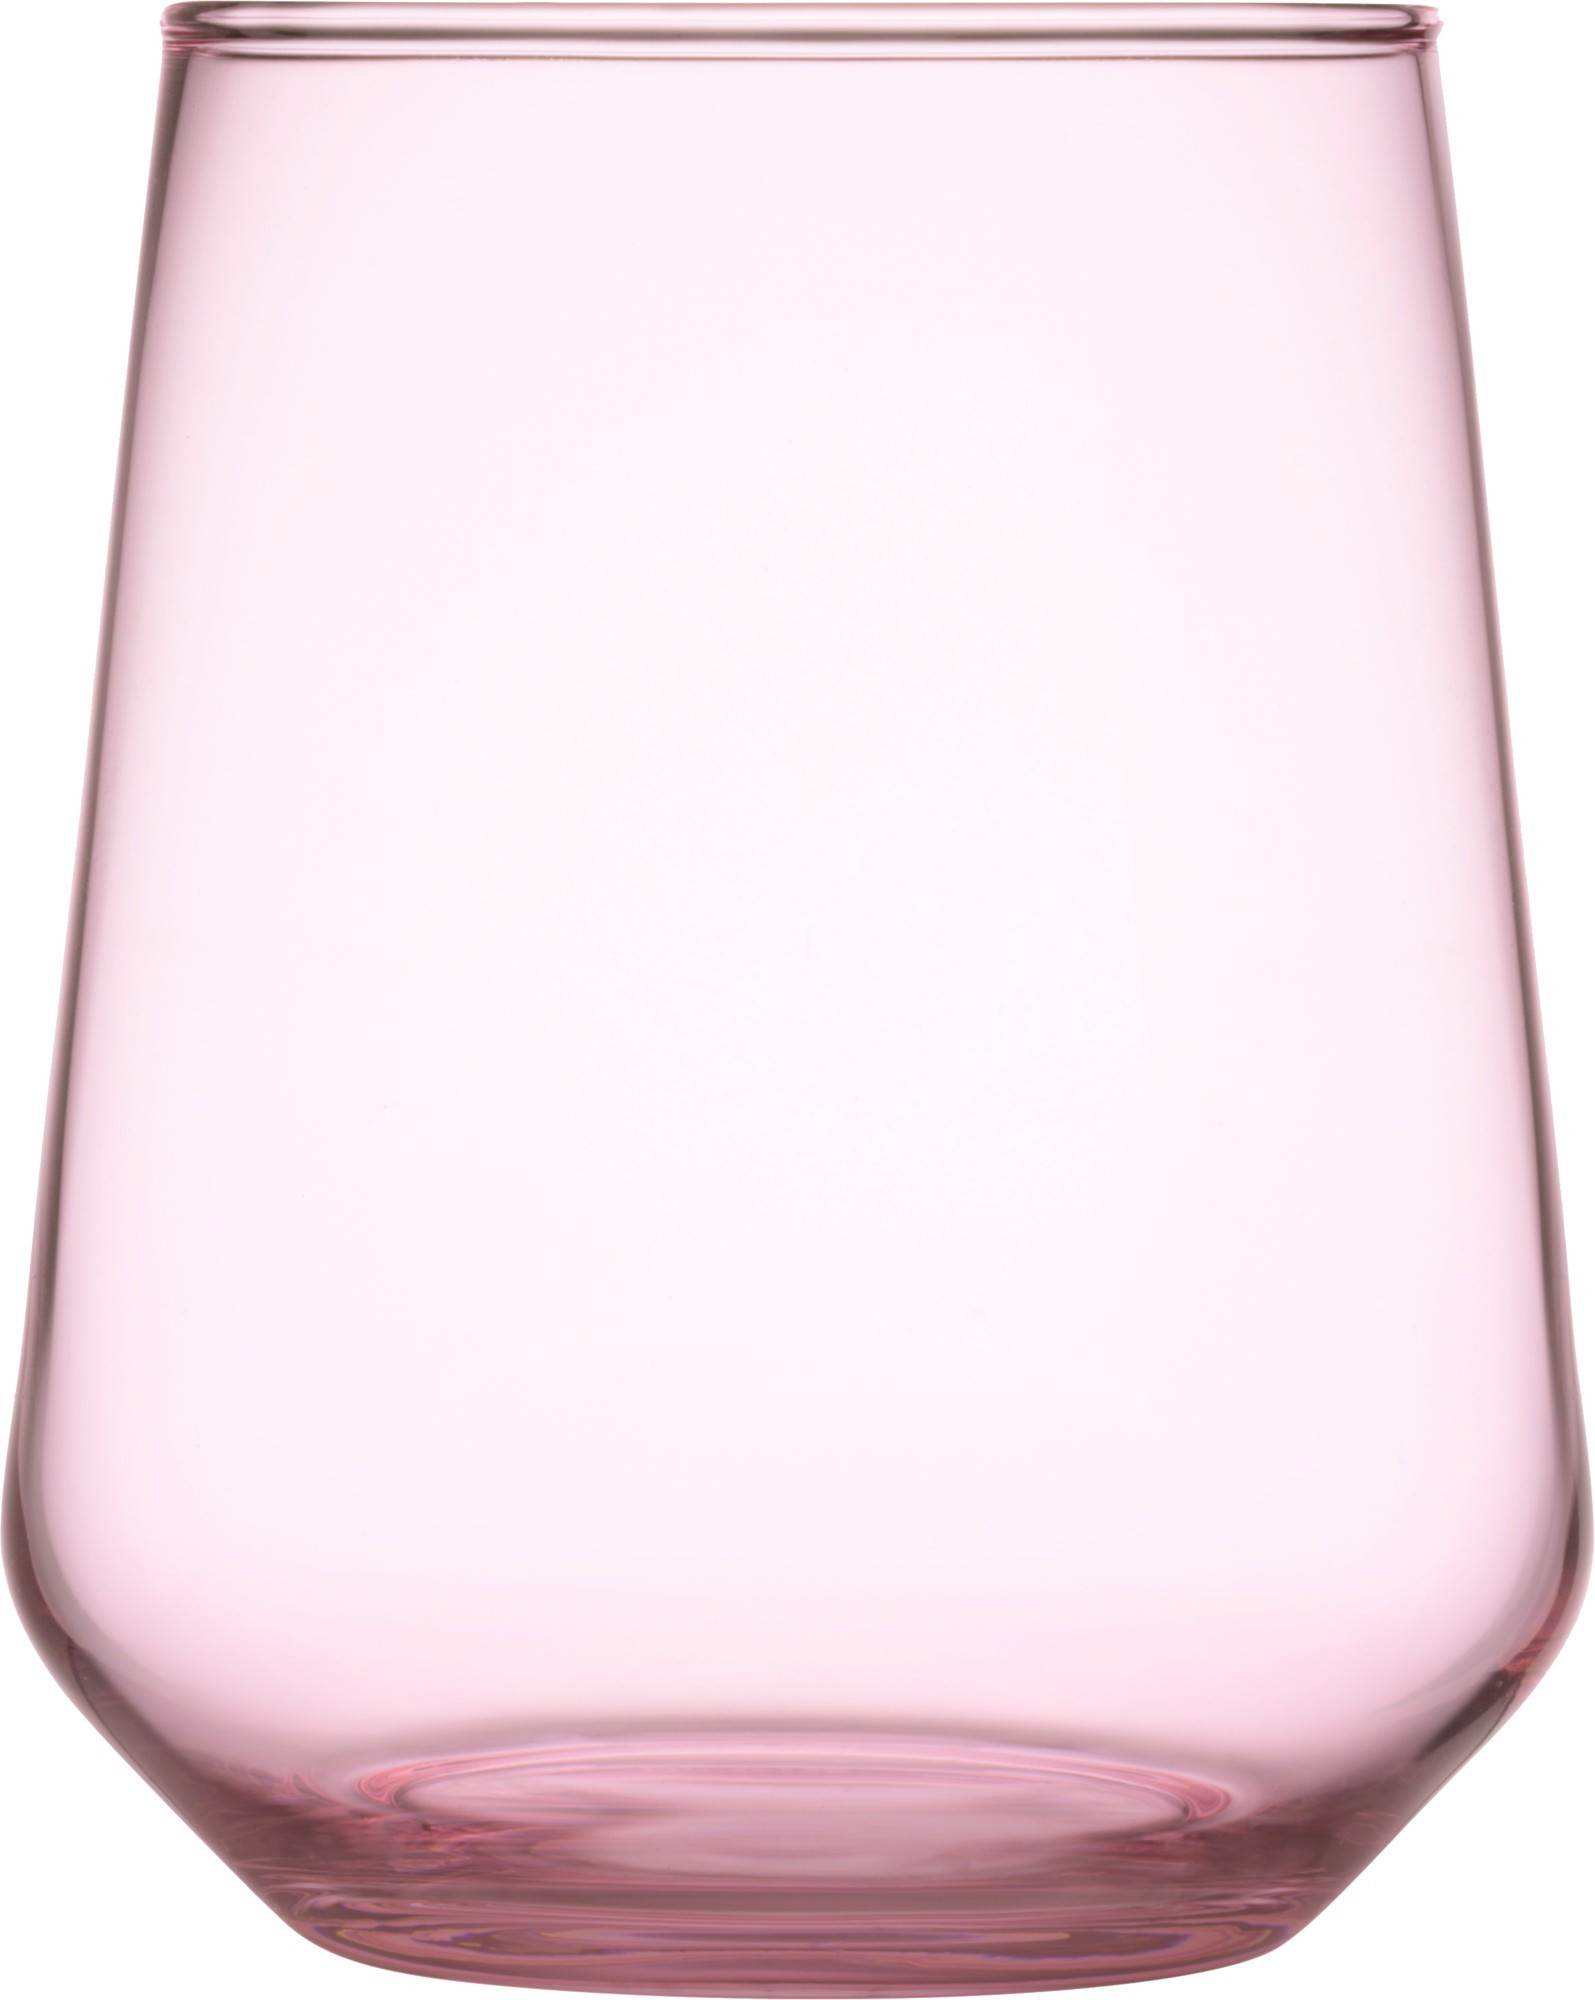 14 Fantastic Blush Pink Glass Vase 2024 free download blush pink glass vase of iittala essence tumbler 35 cl pale pink 2 pcs iittala com pertaining to iittala essence tumbler 35cl pale pink 2pc